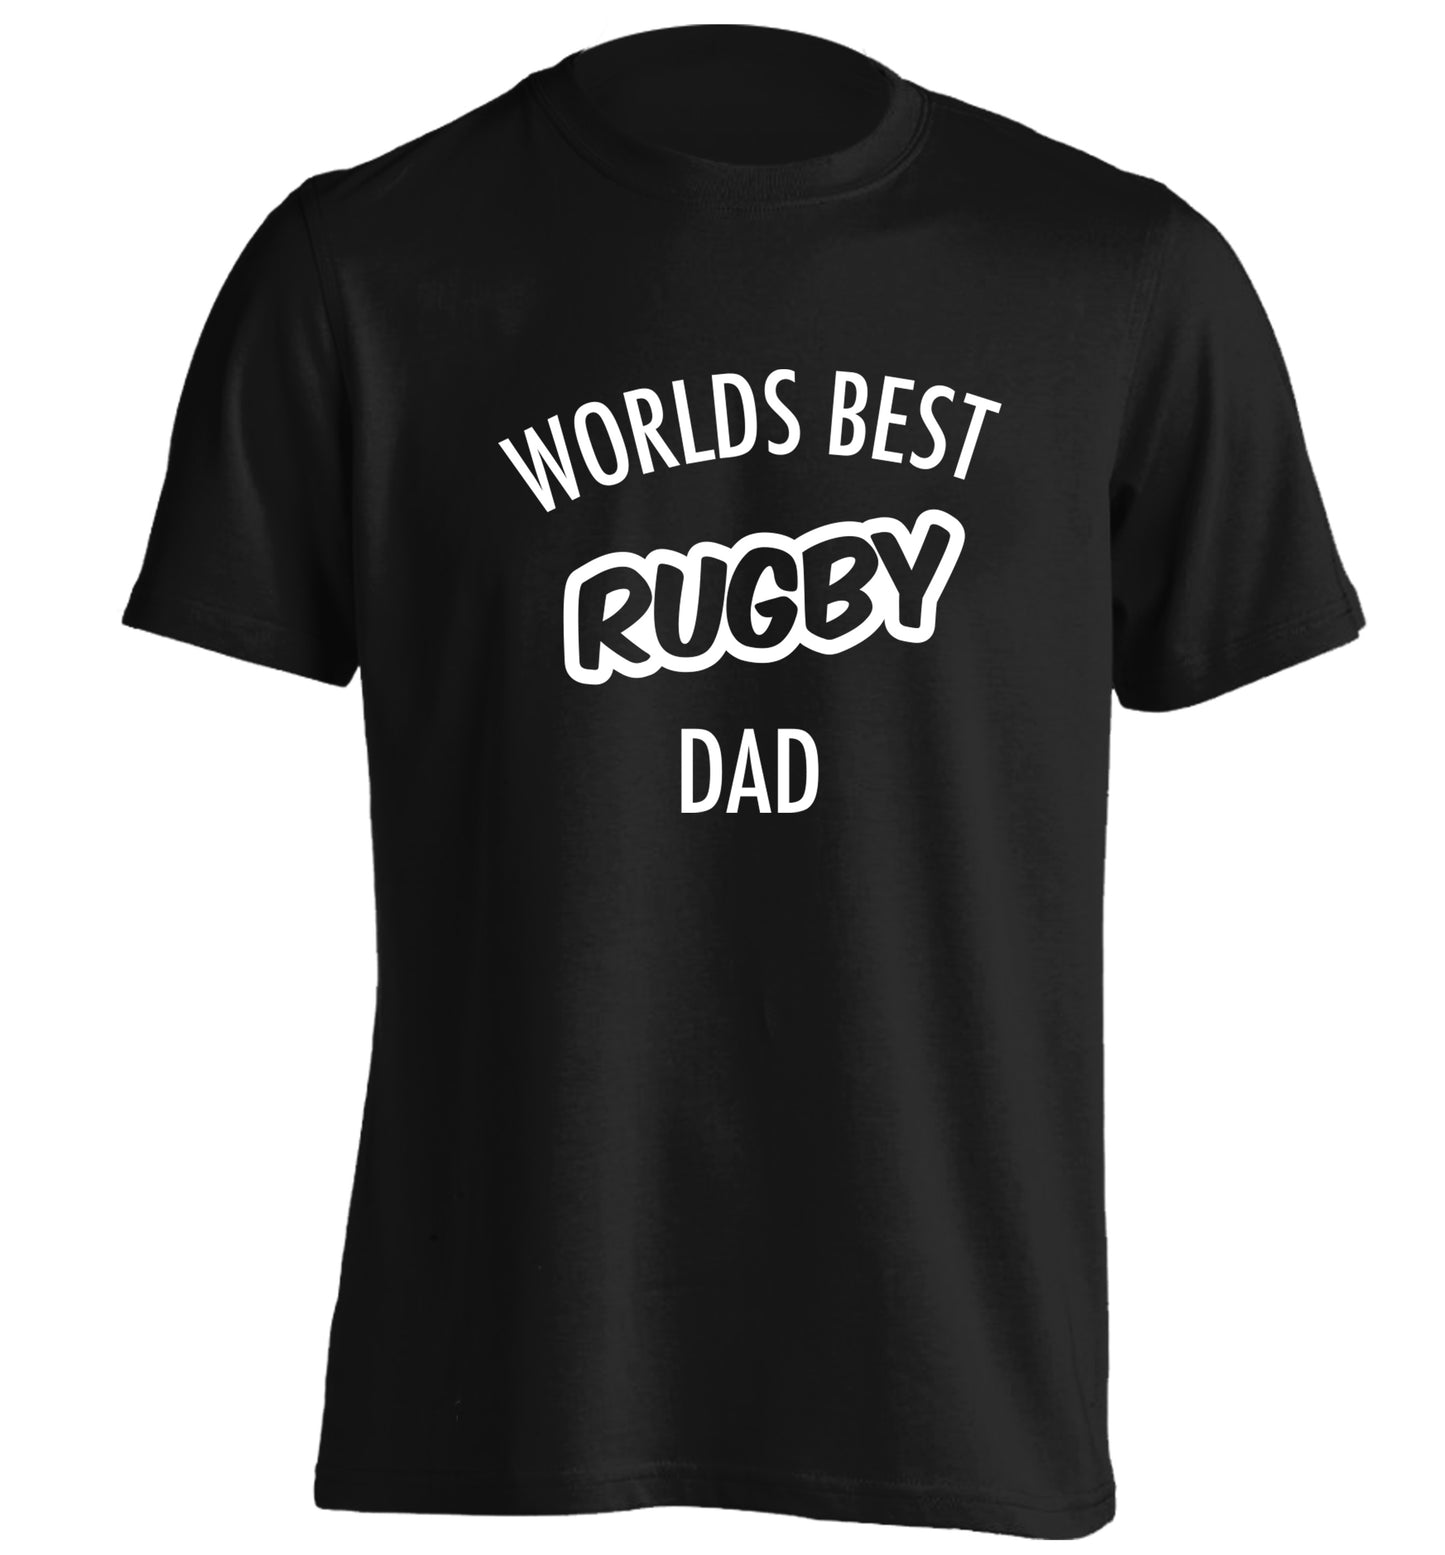 Worlds best rugby dad adults unisex black Tshirt 2XL